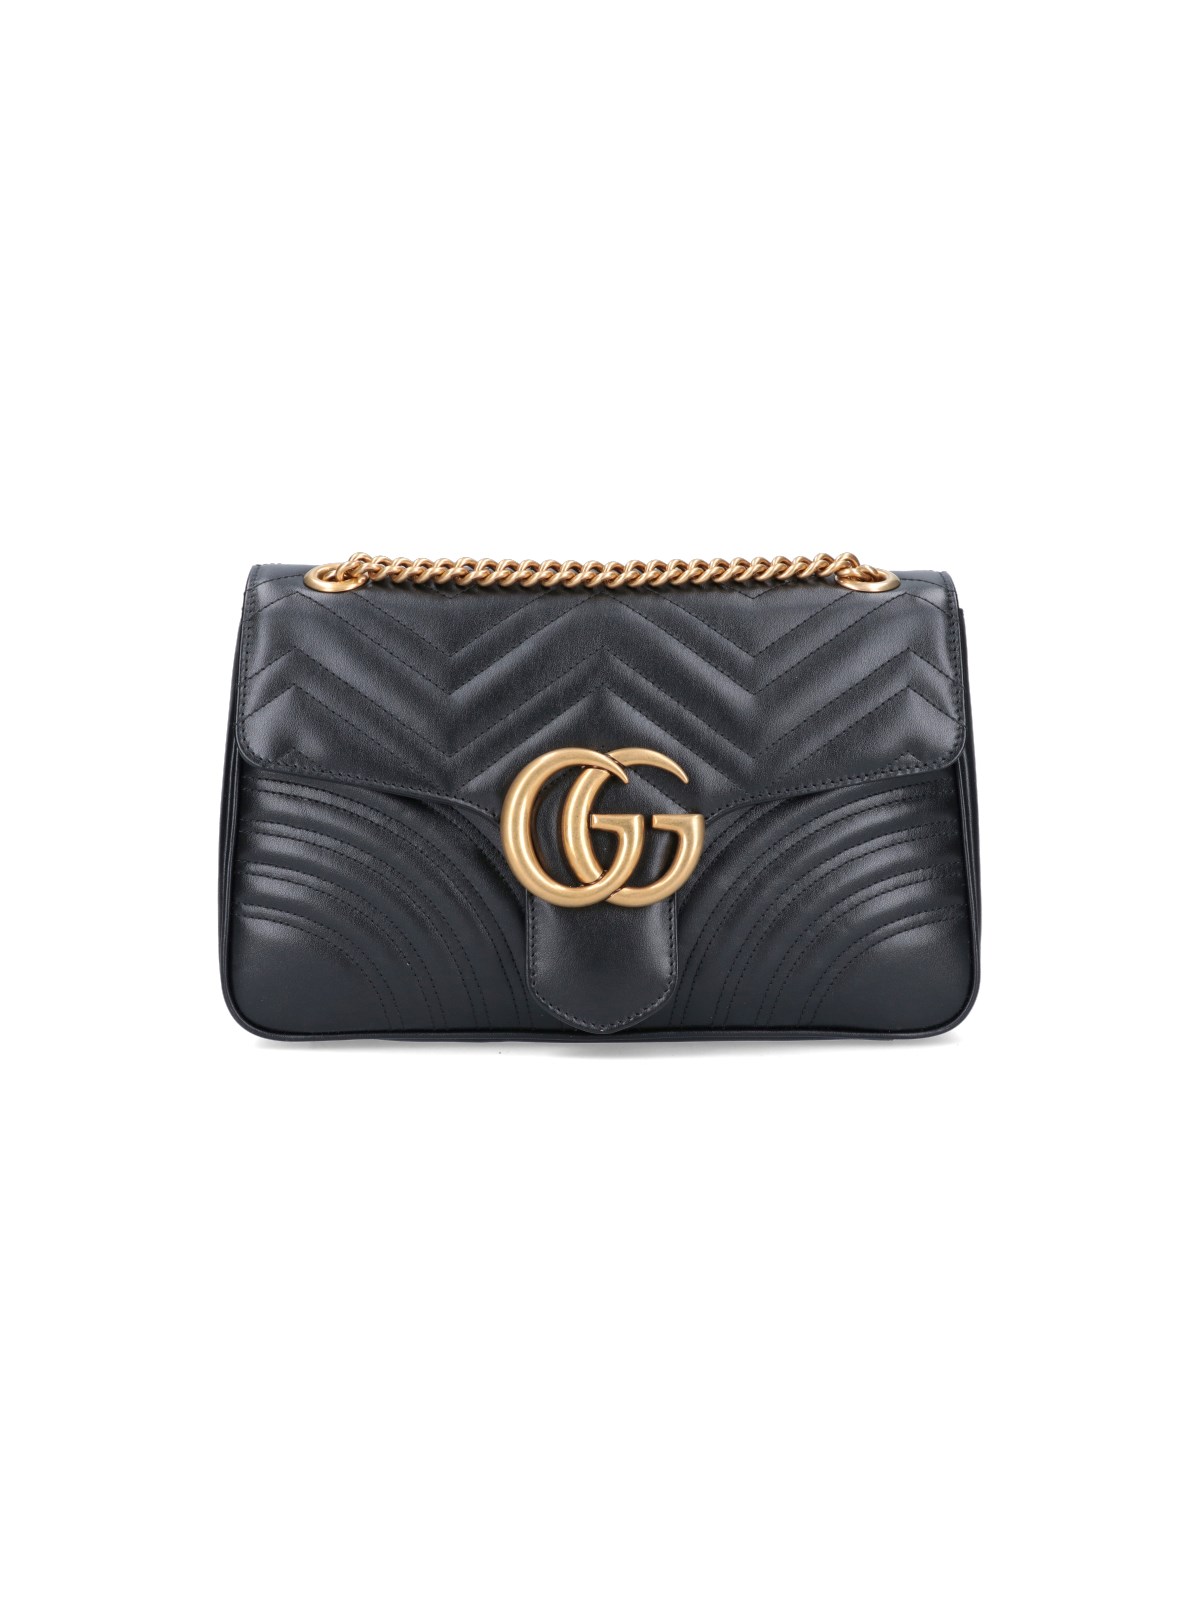 Gucci Gg Marmont Medium Leather Shoulder Bag In Black  